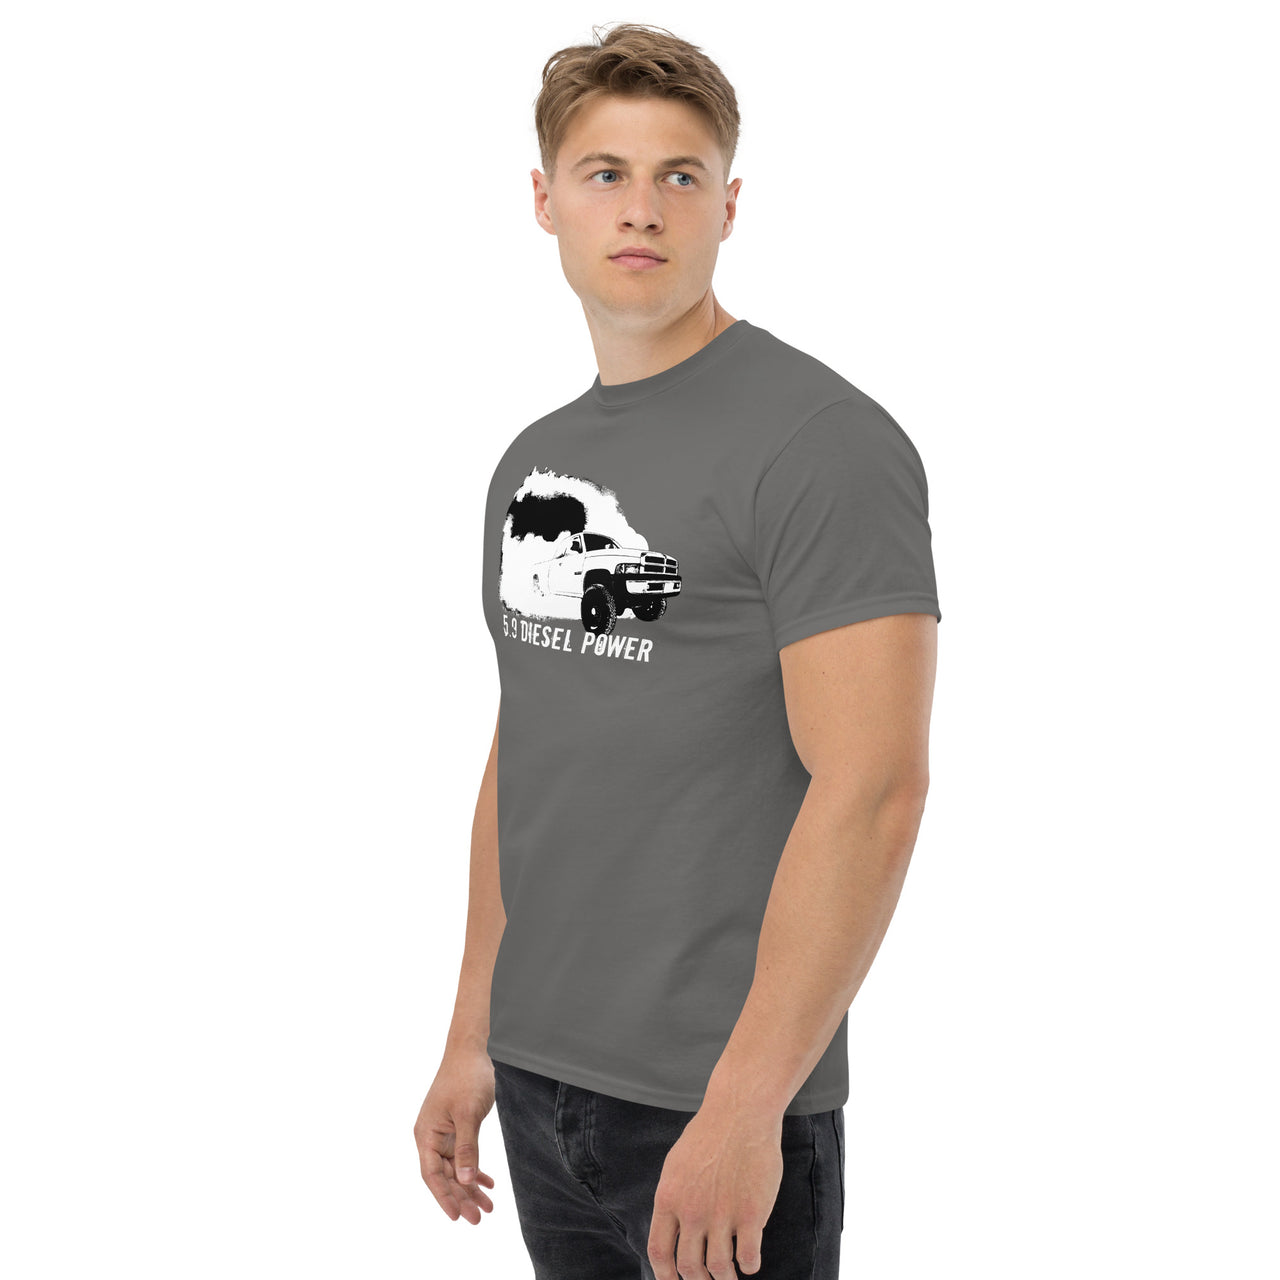 2nd Gen 5.9 Diesel Burnout Rolling Coal T-Shirt modeled in grey